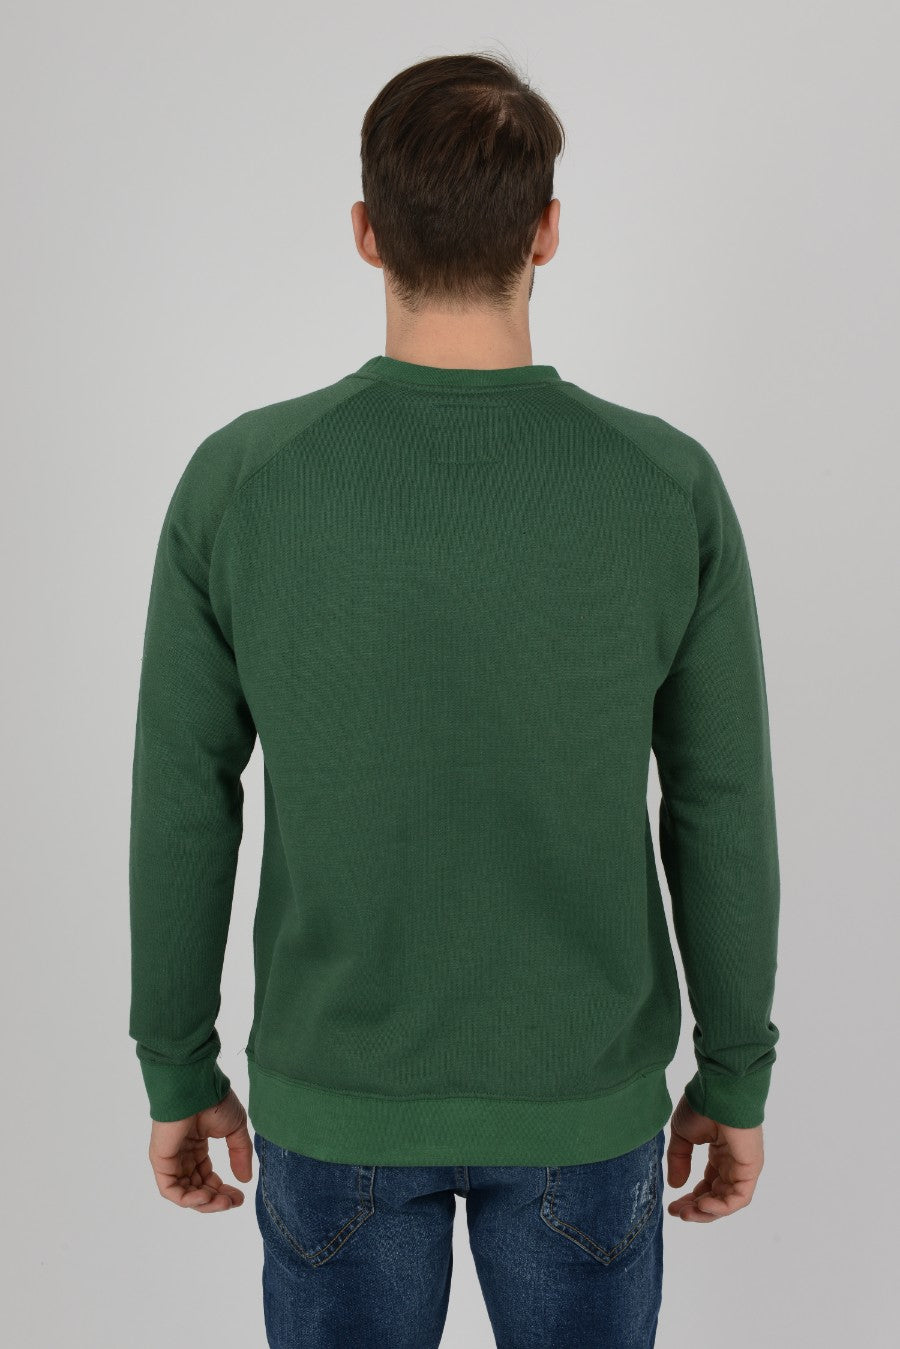 Mens-Raglan-Sweatshirt-Casual-Bottle-Green